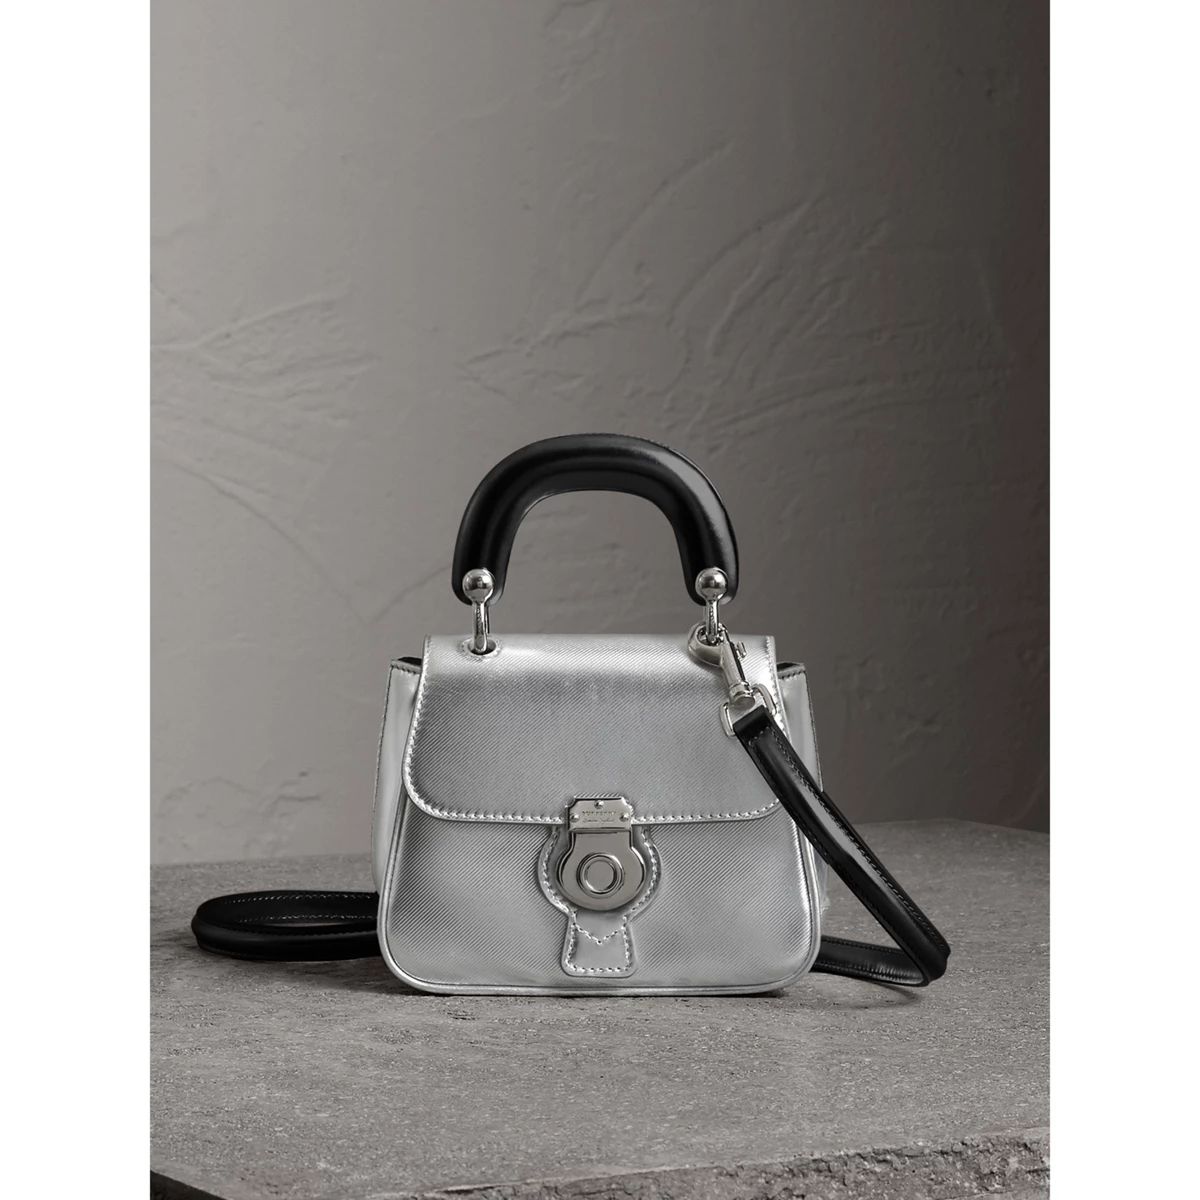 Burberry The Mini DK88 Top Handle Bag in Metallic Leather, Grey | Burberry (US)